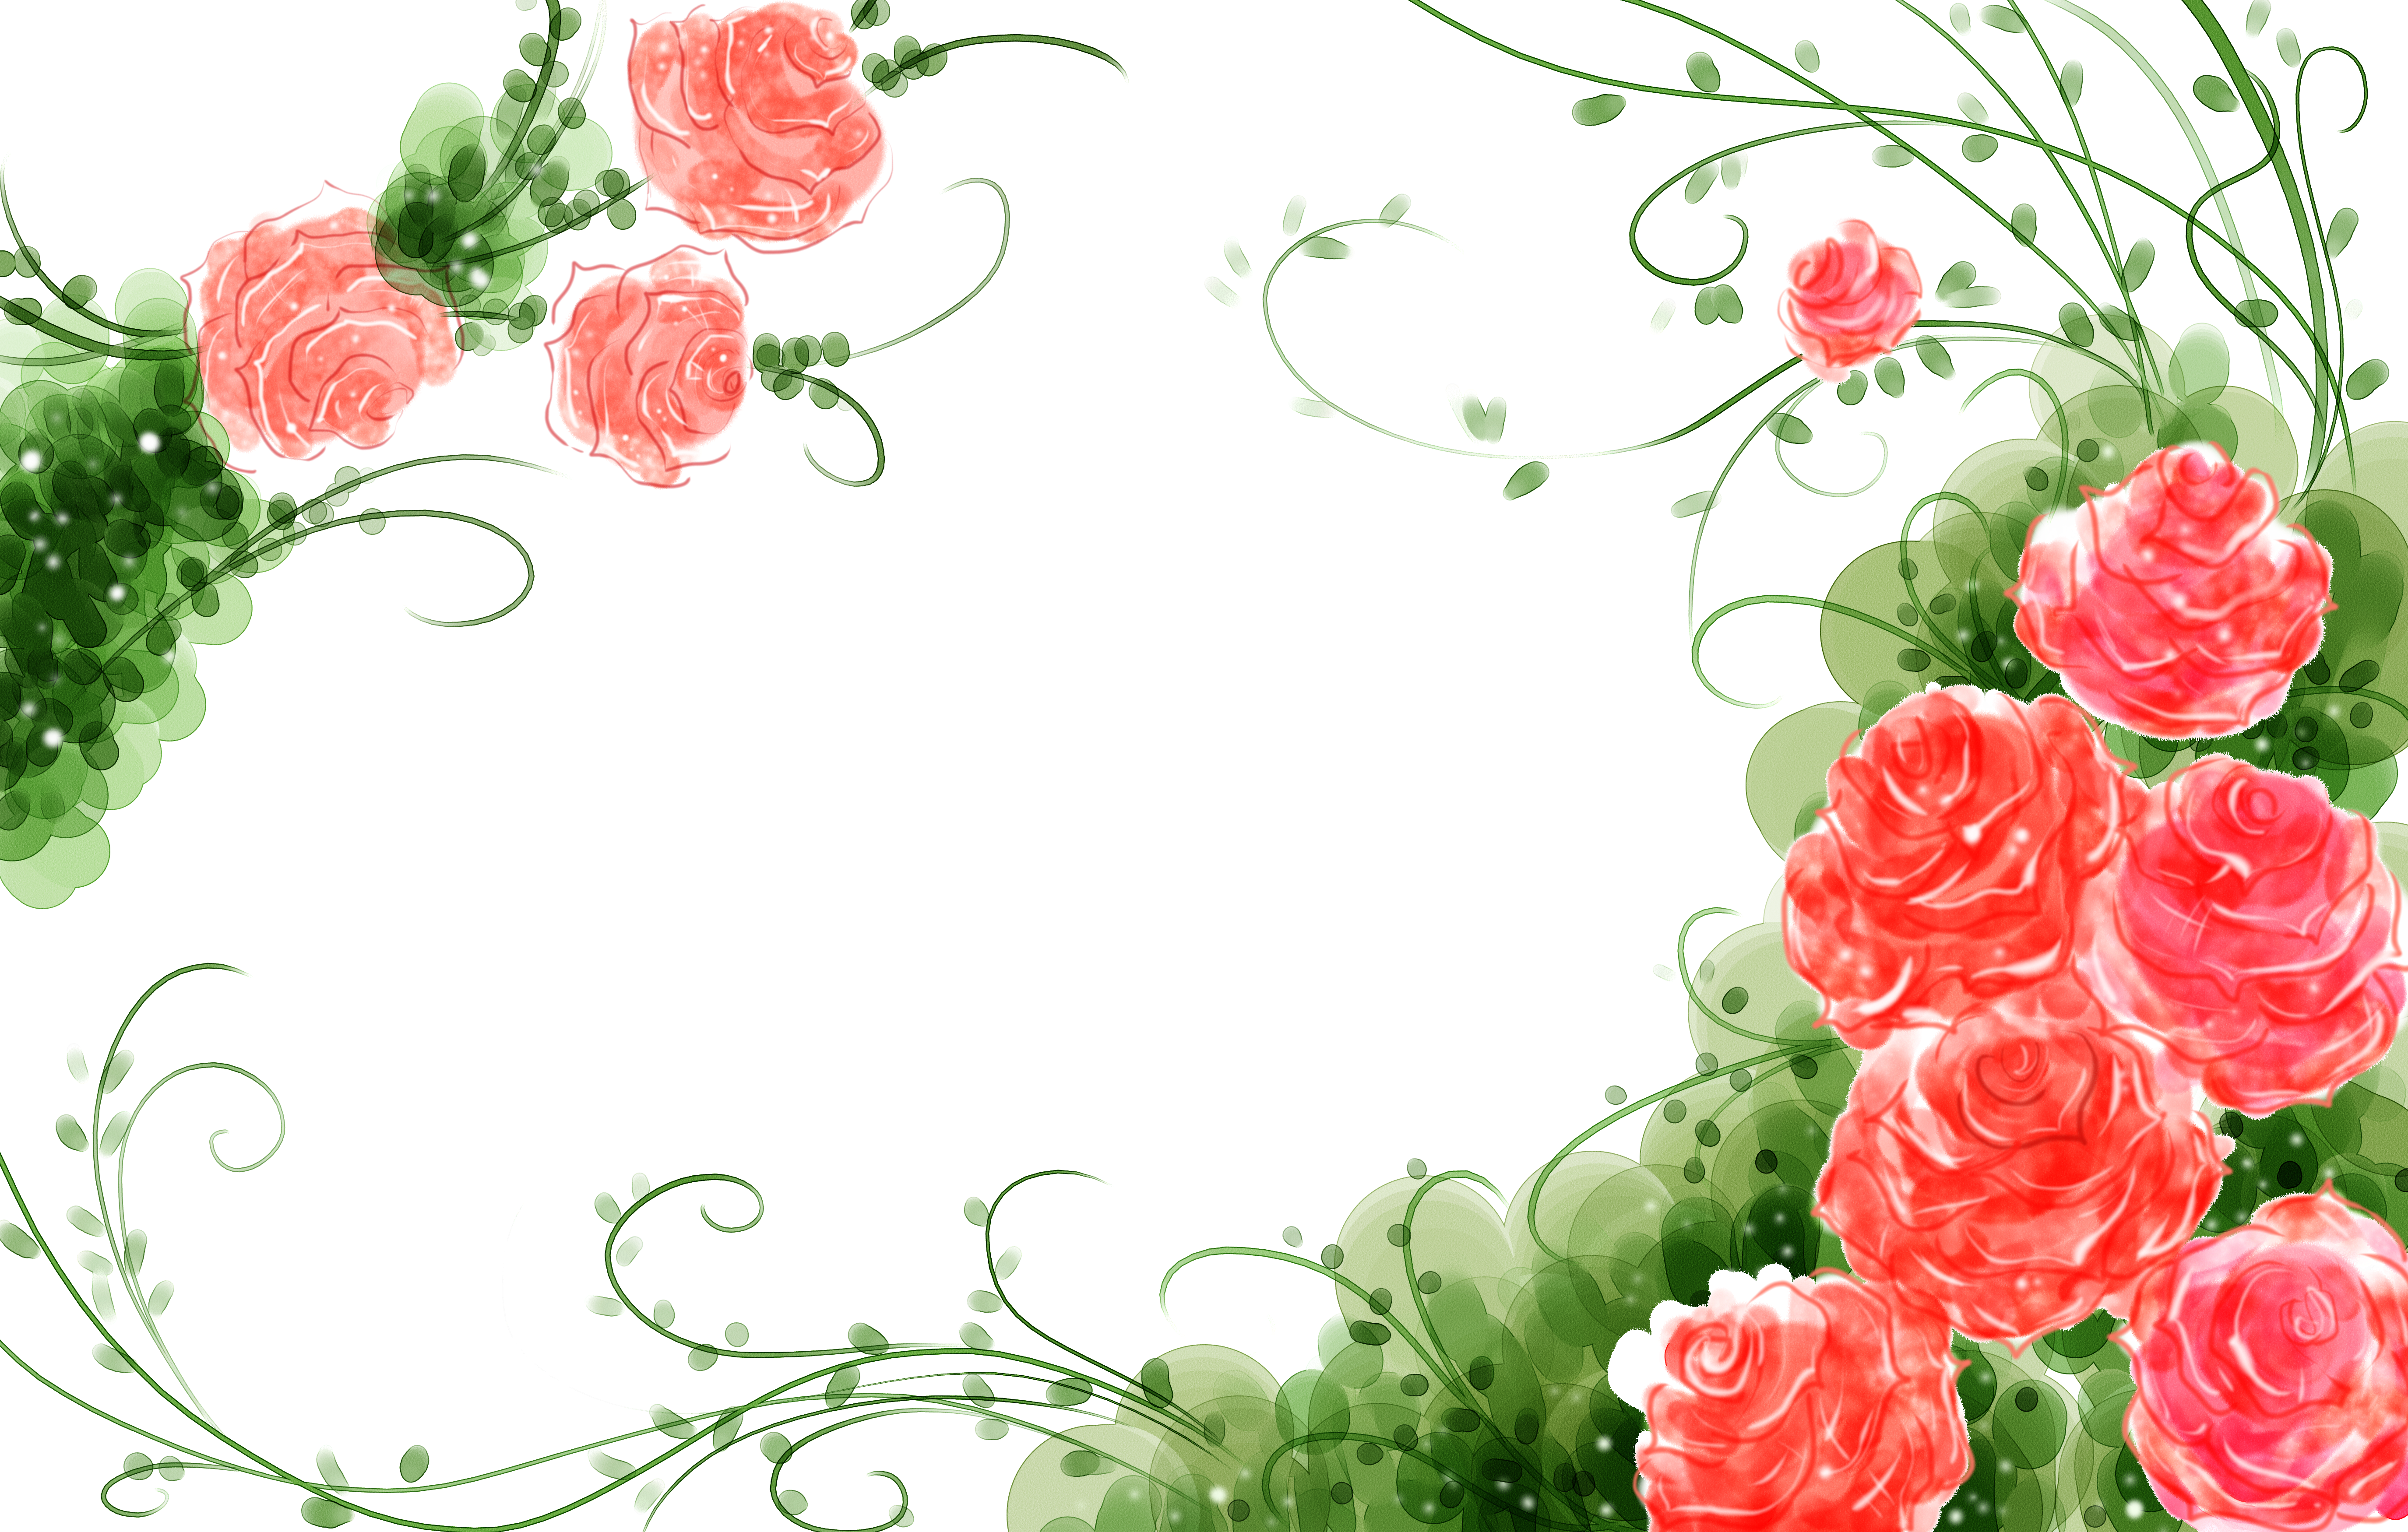 Garden Roses Flower Watercolor Painting Illustration - Flower Lae Backgeound (5500x3500)